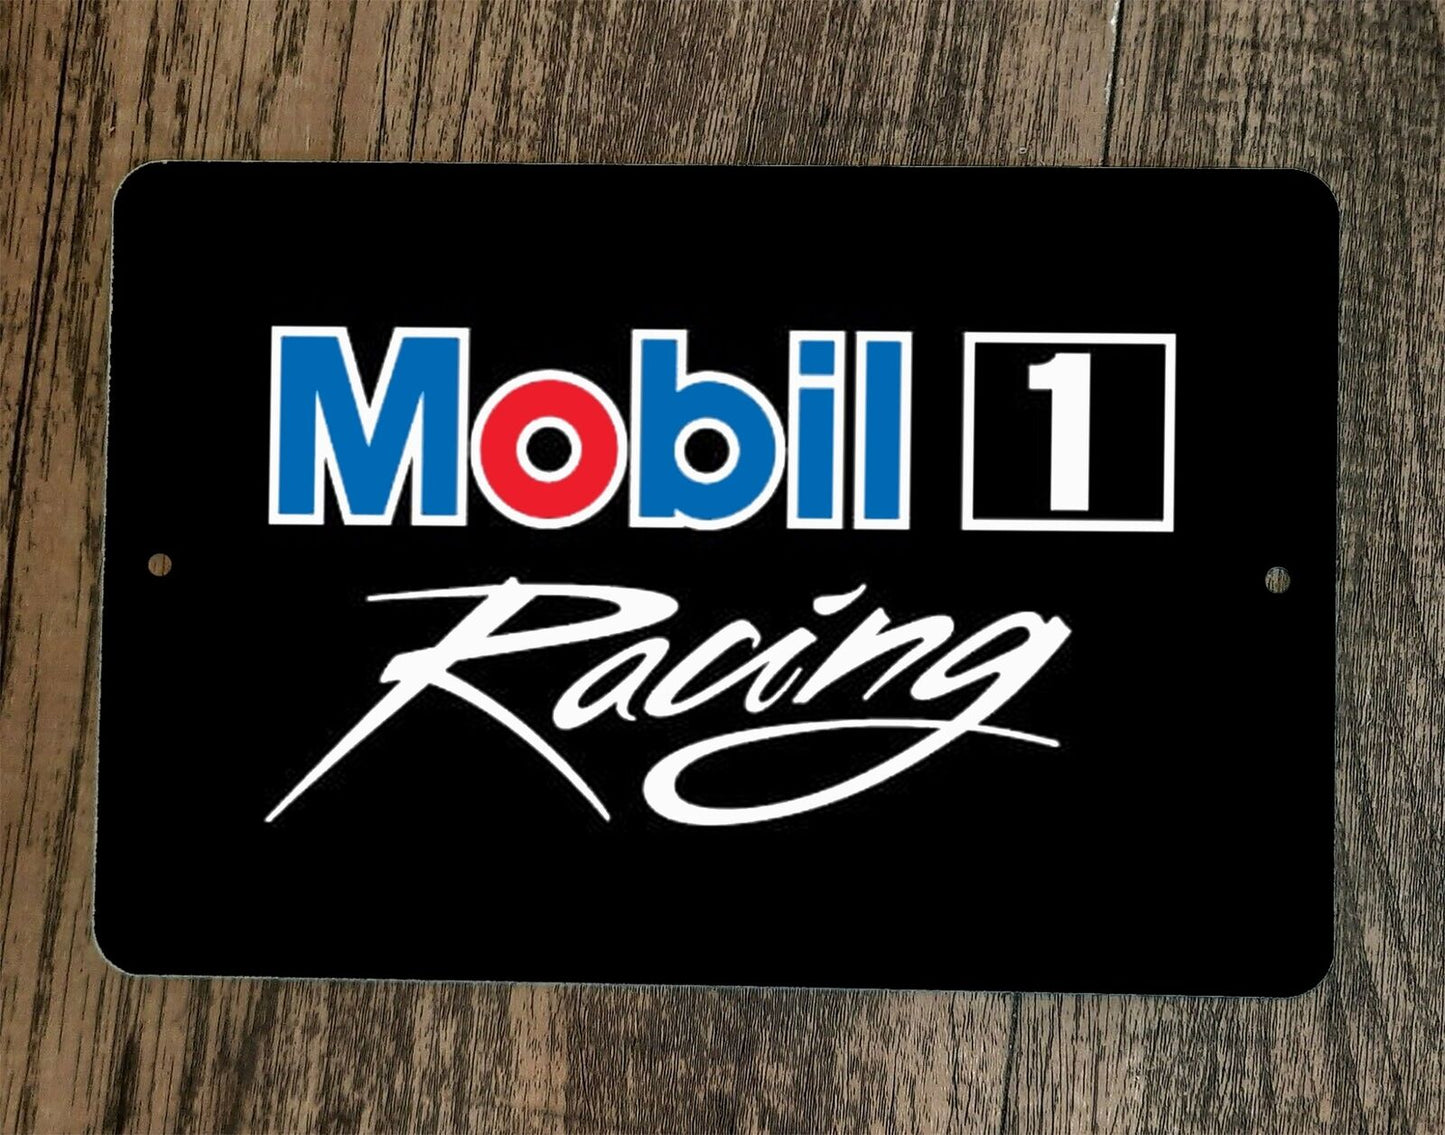 Mobil 1 Racing 8x12 Metal Wall Sign Garage Poster